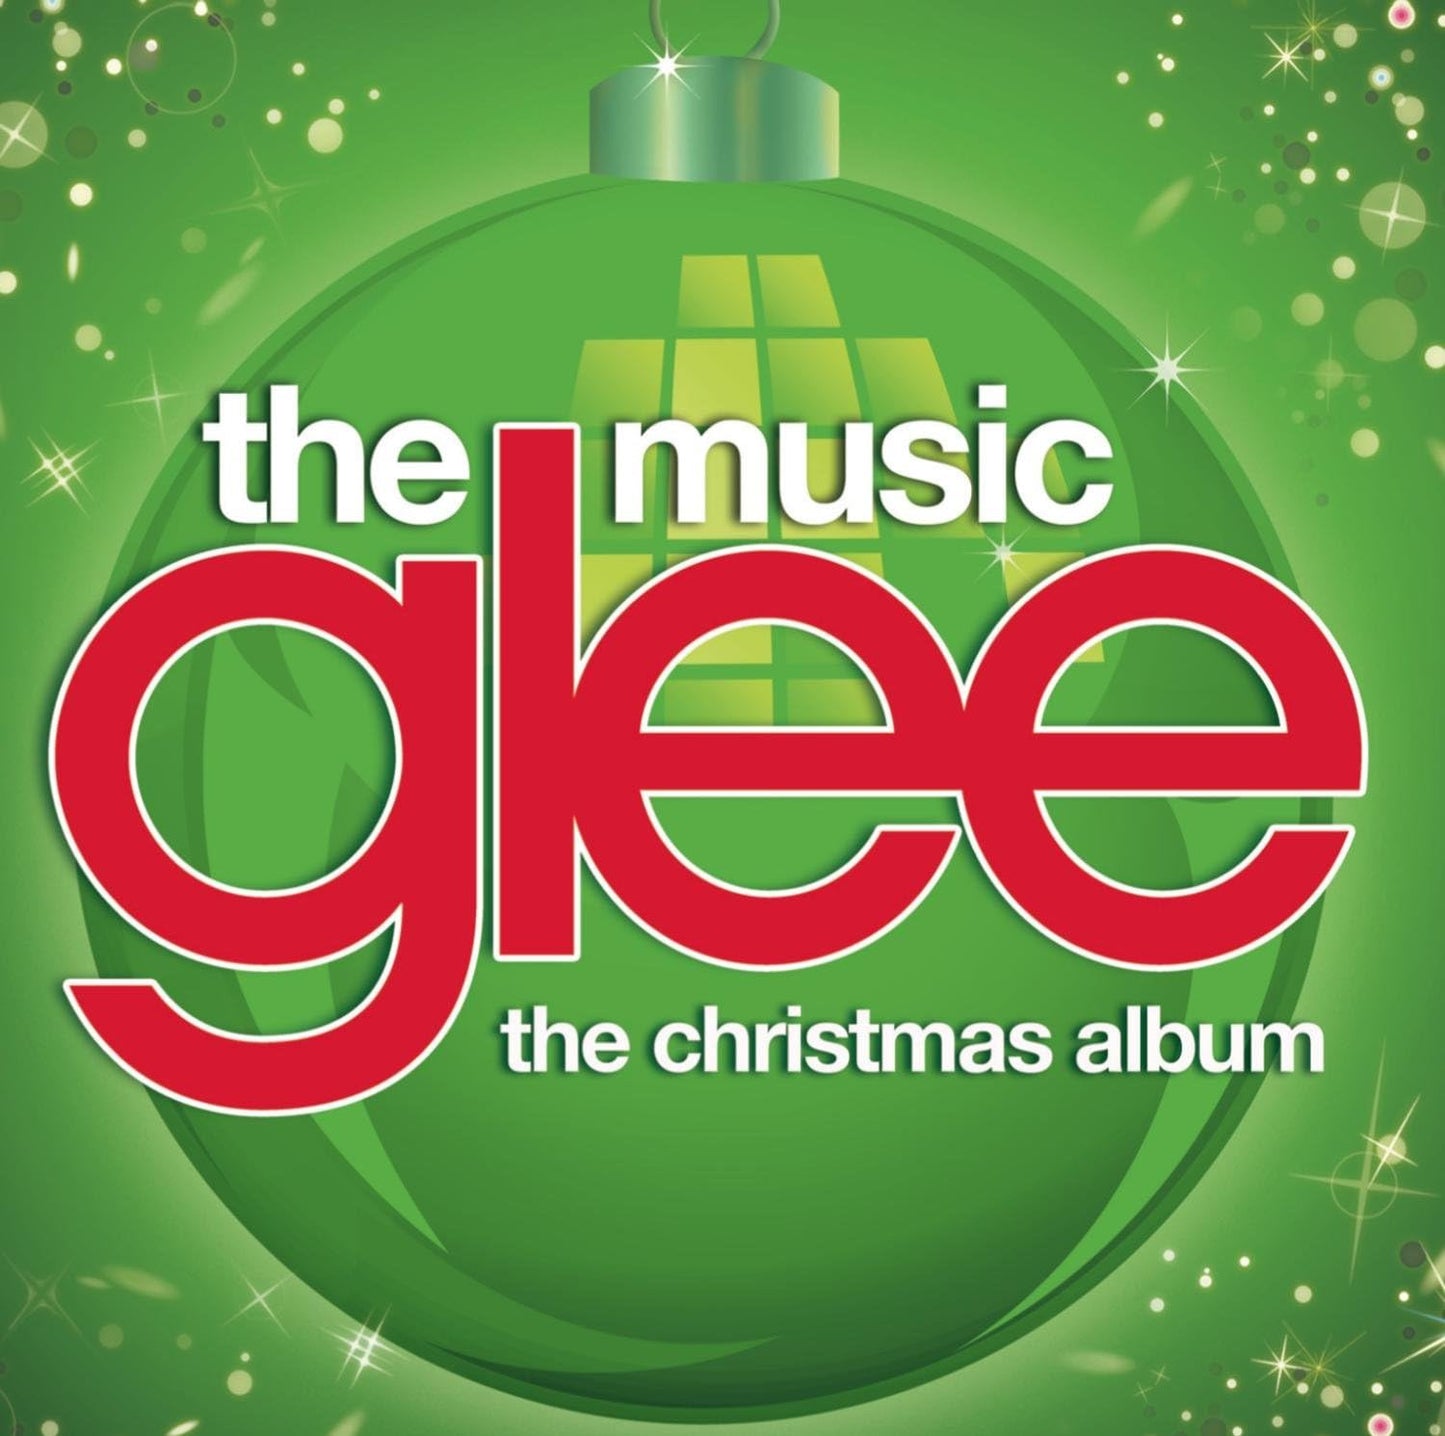 Glee: The Christmas Album [Audio CD] Glee Cast